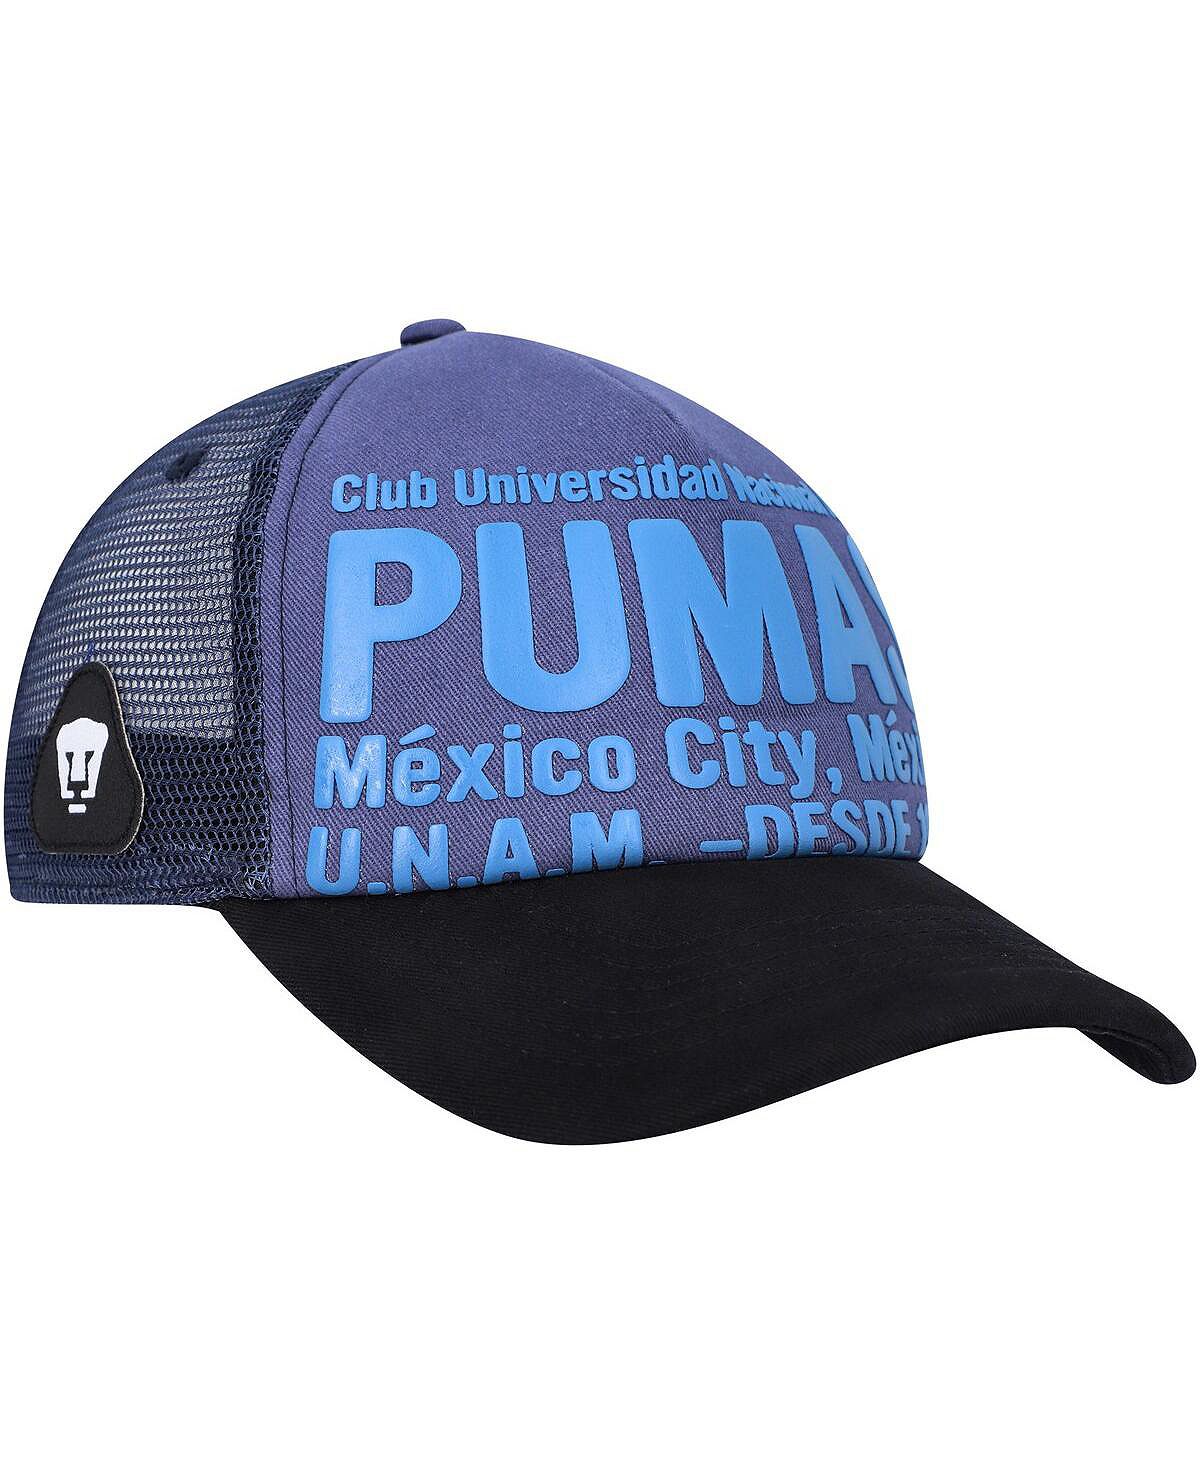 Мужская темно-синяя бейсболка Pumas Club Gold Fan Ink black pumas black pumas black pumas